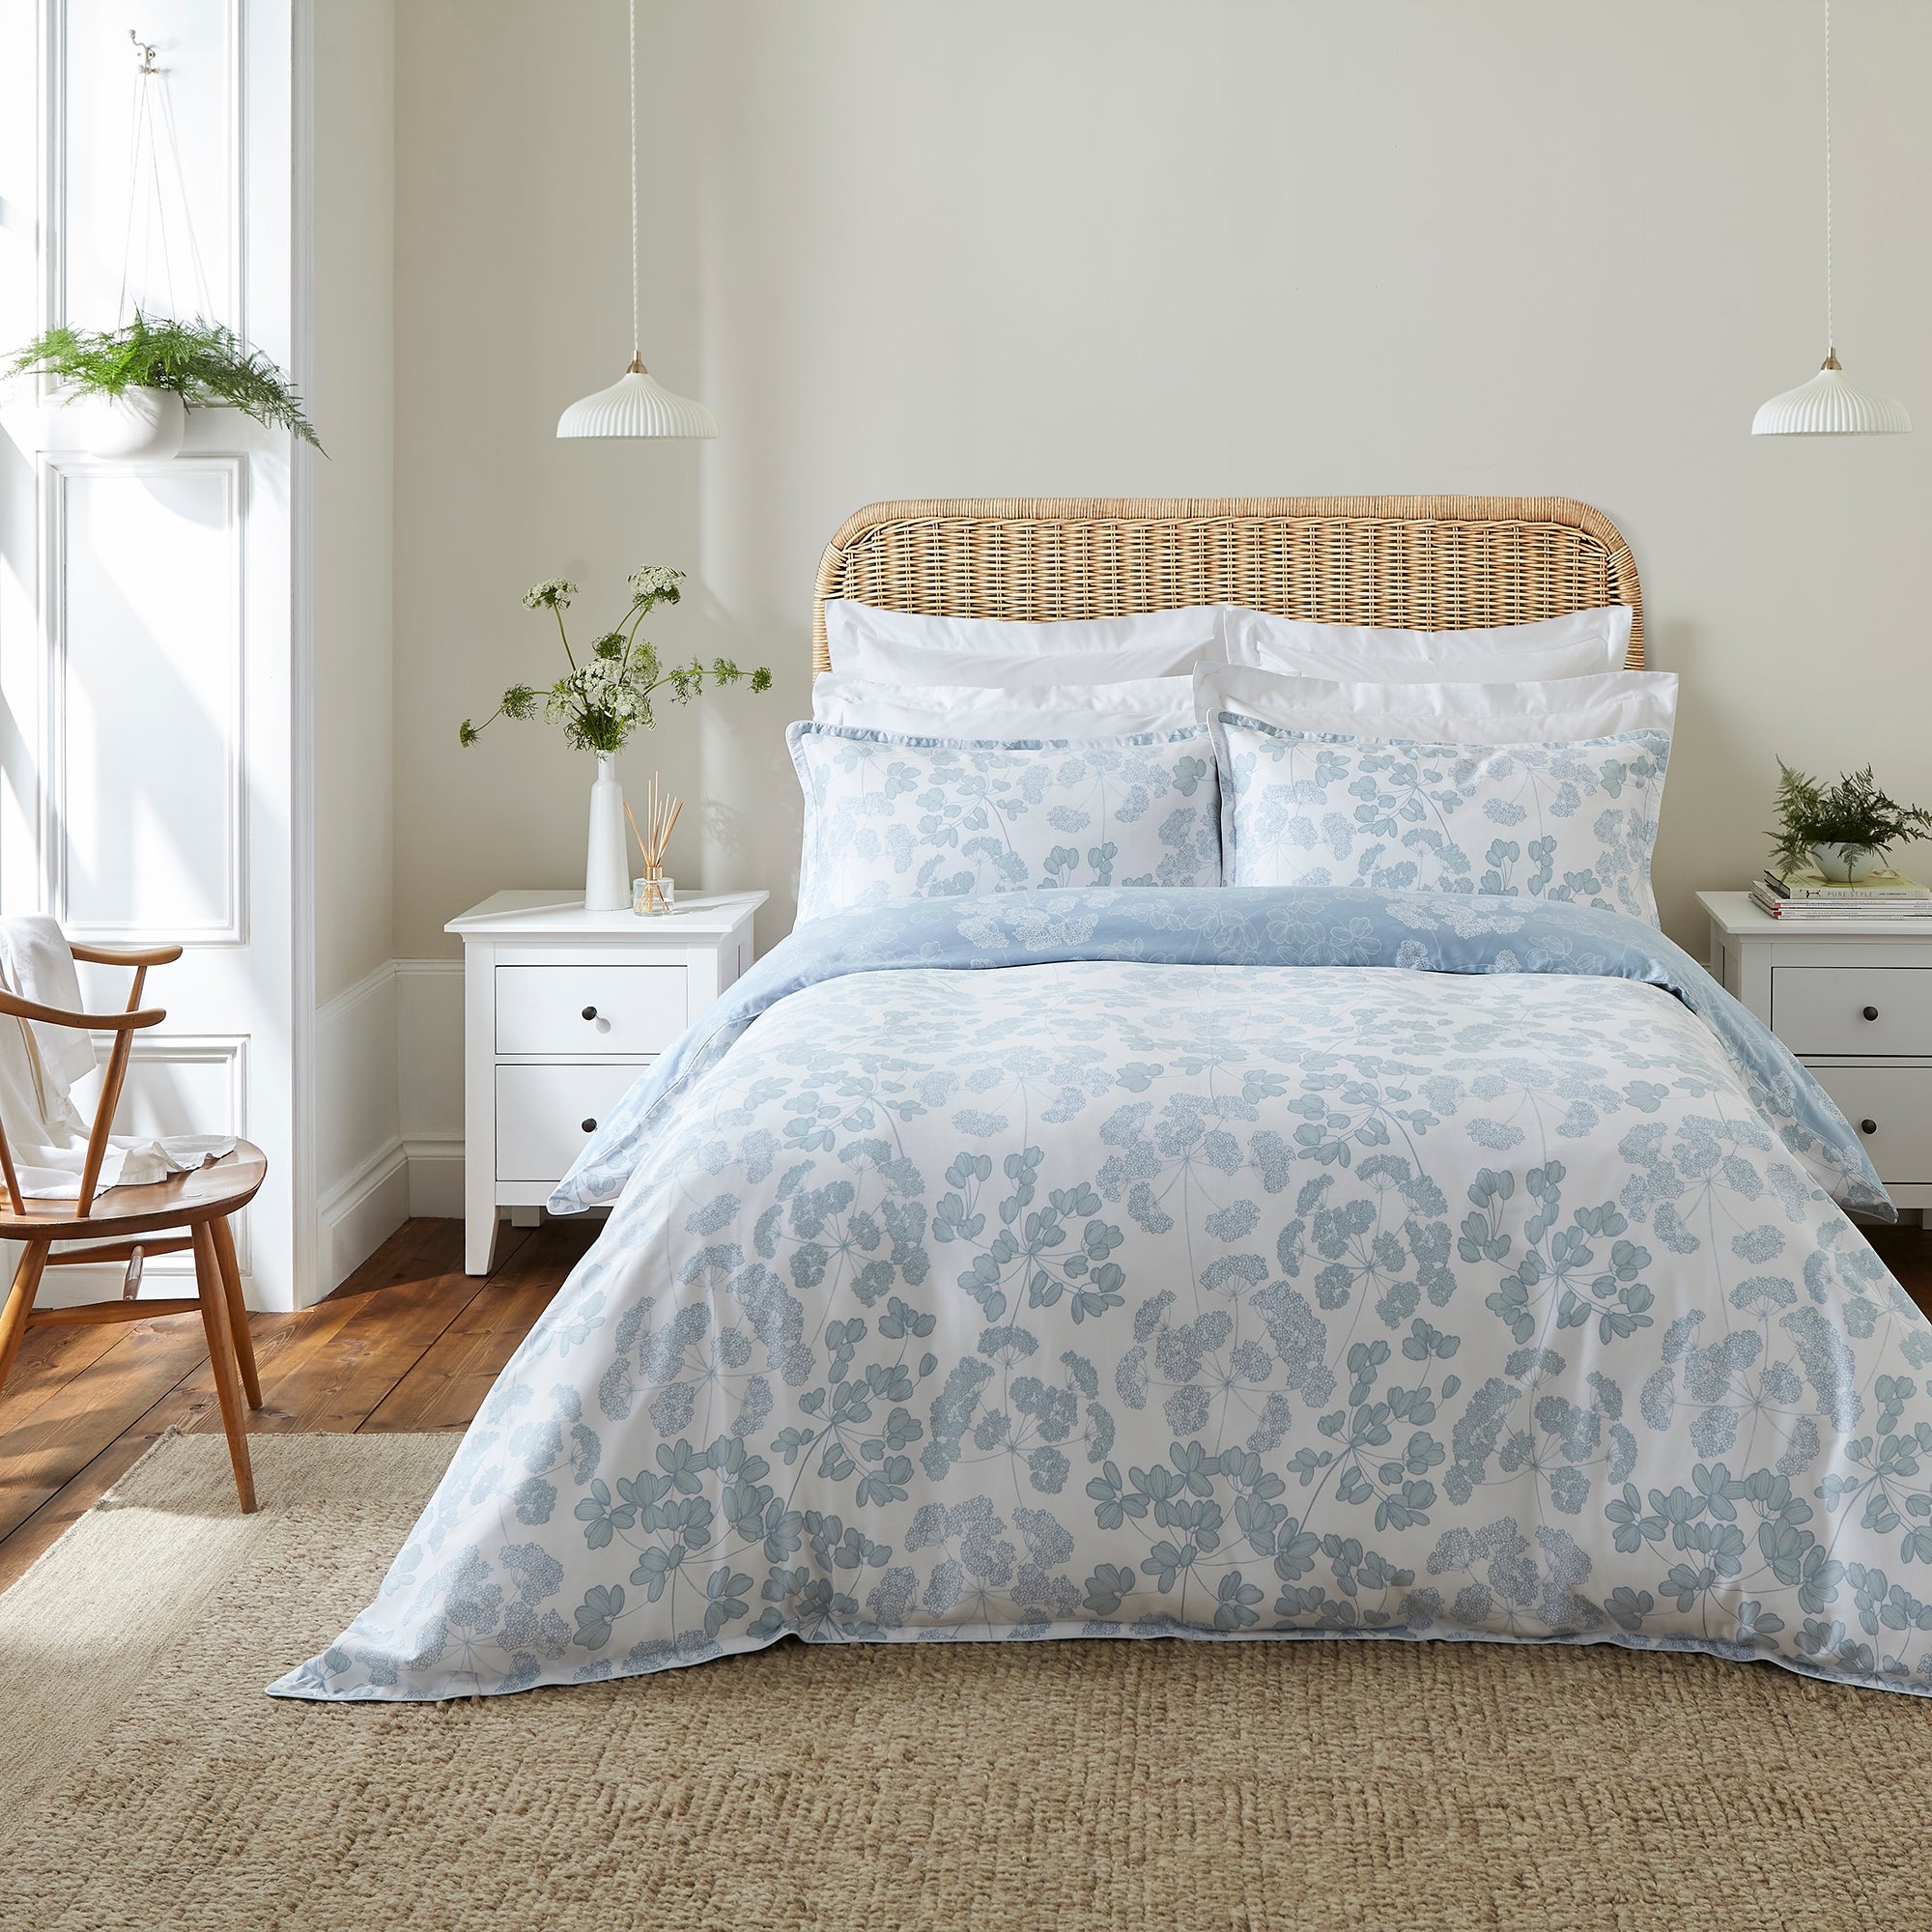 Dorma Daylesford Blue 100 Cotton Duvet Cover And Pillowcase Set Blue